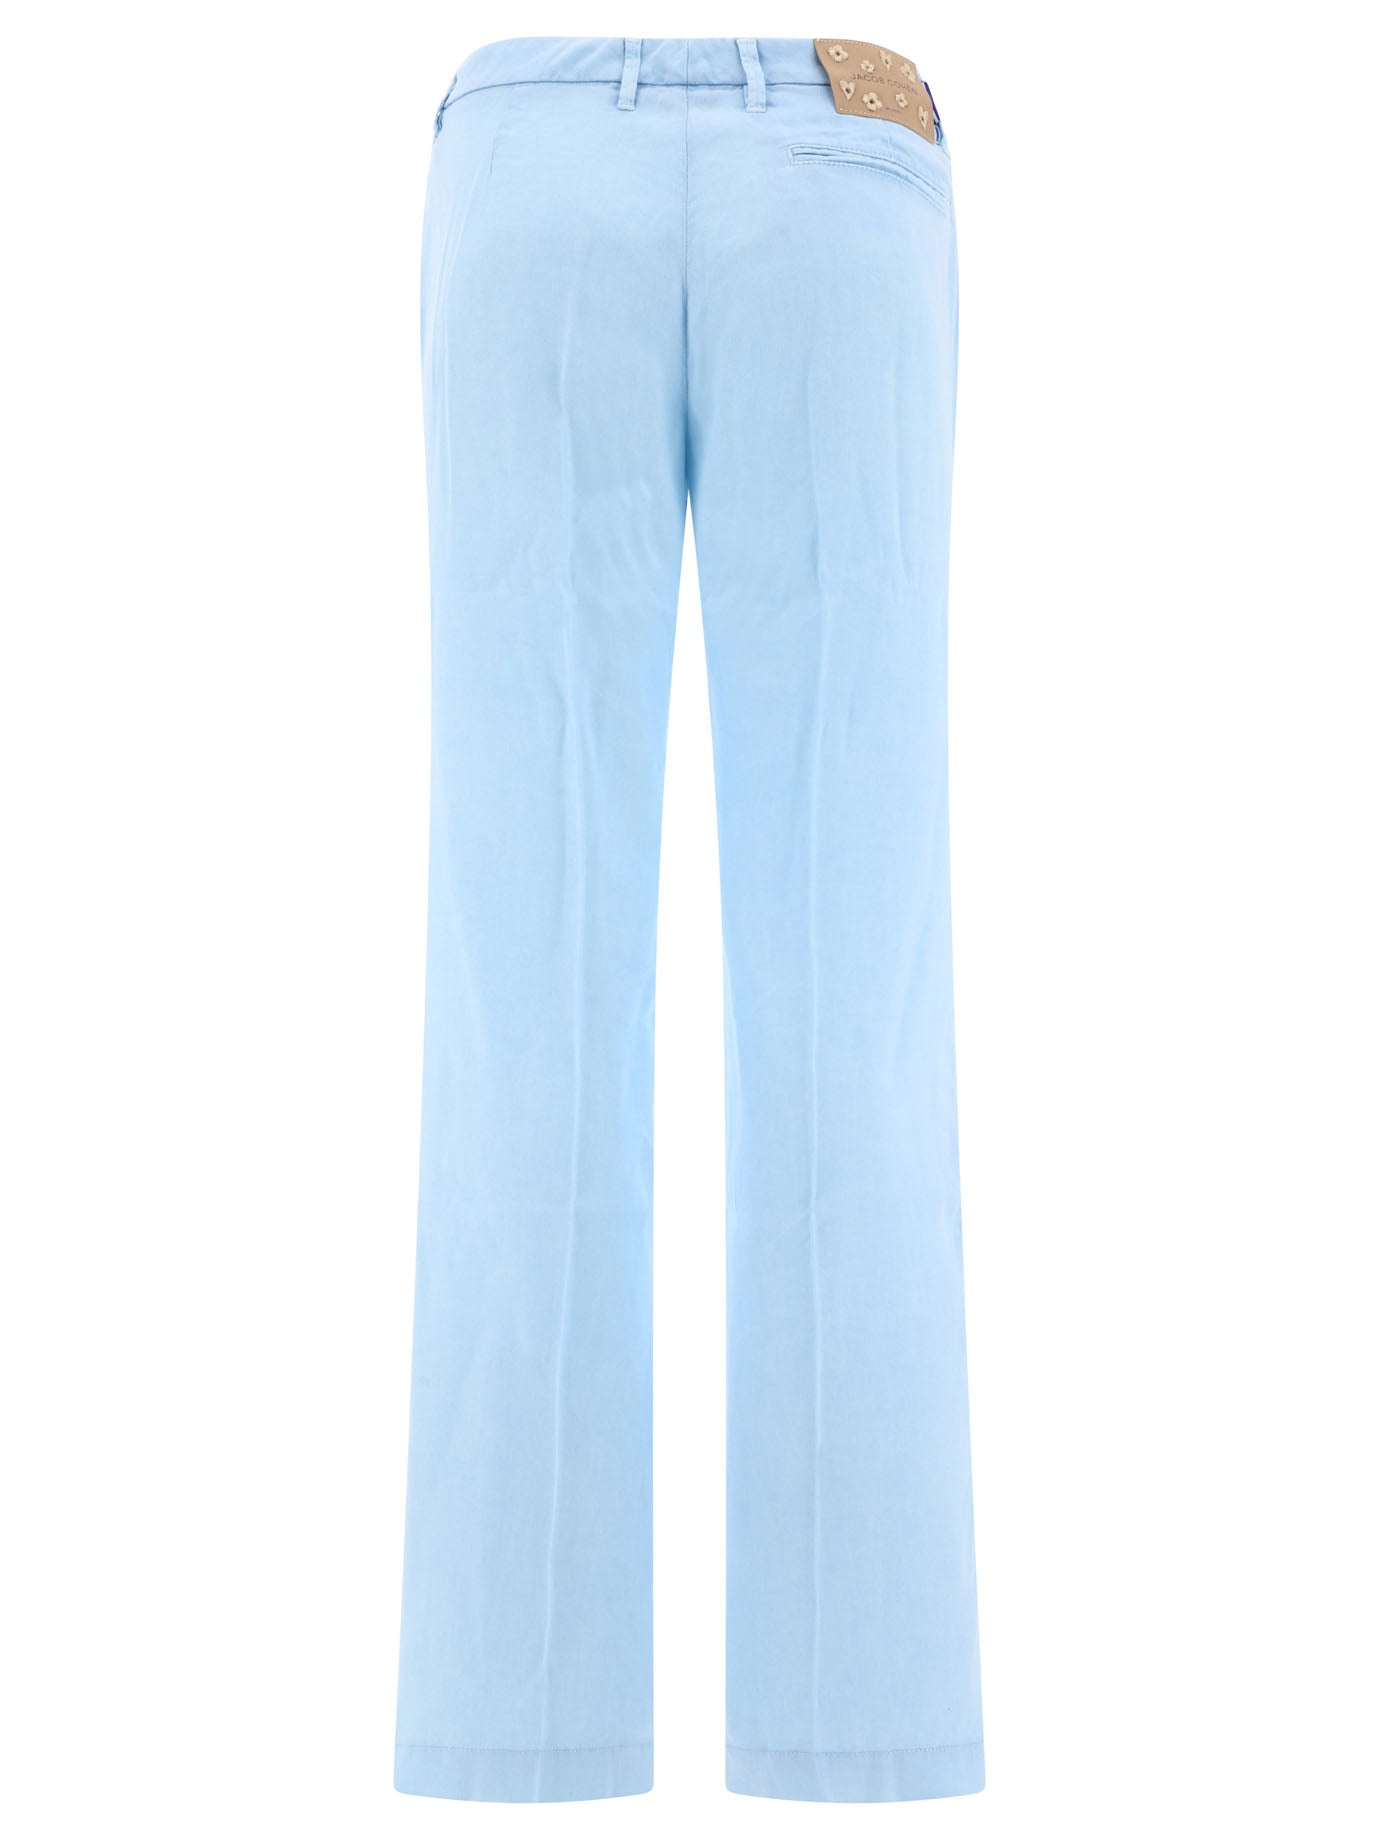 Shop Jacob Cohen Selena Trousers Light Blue